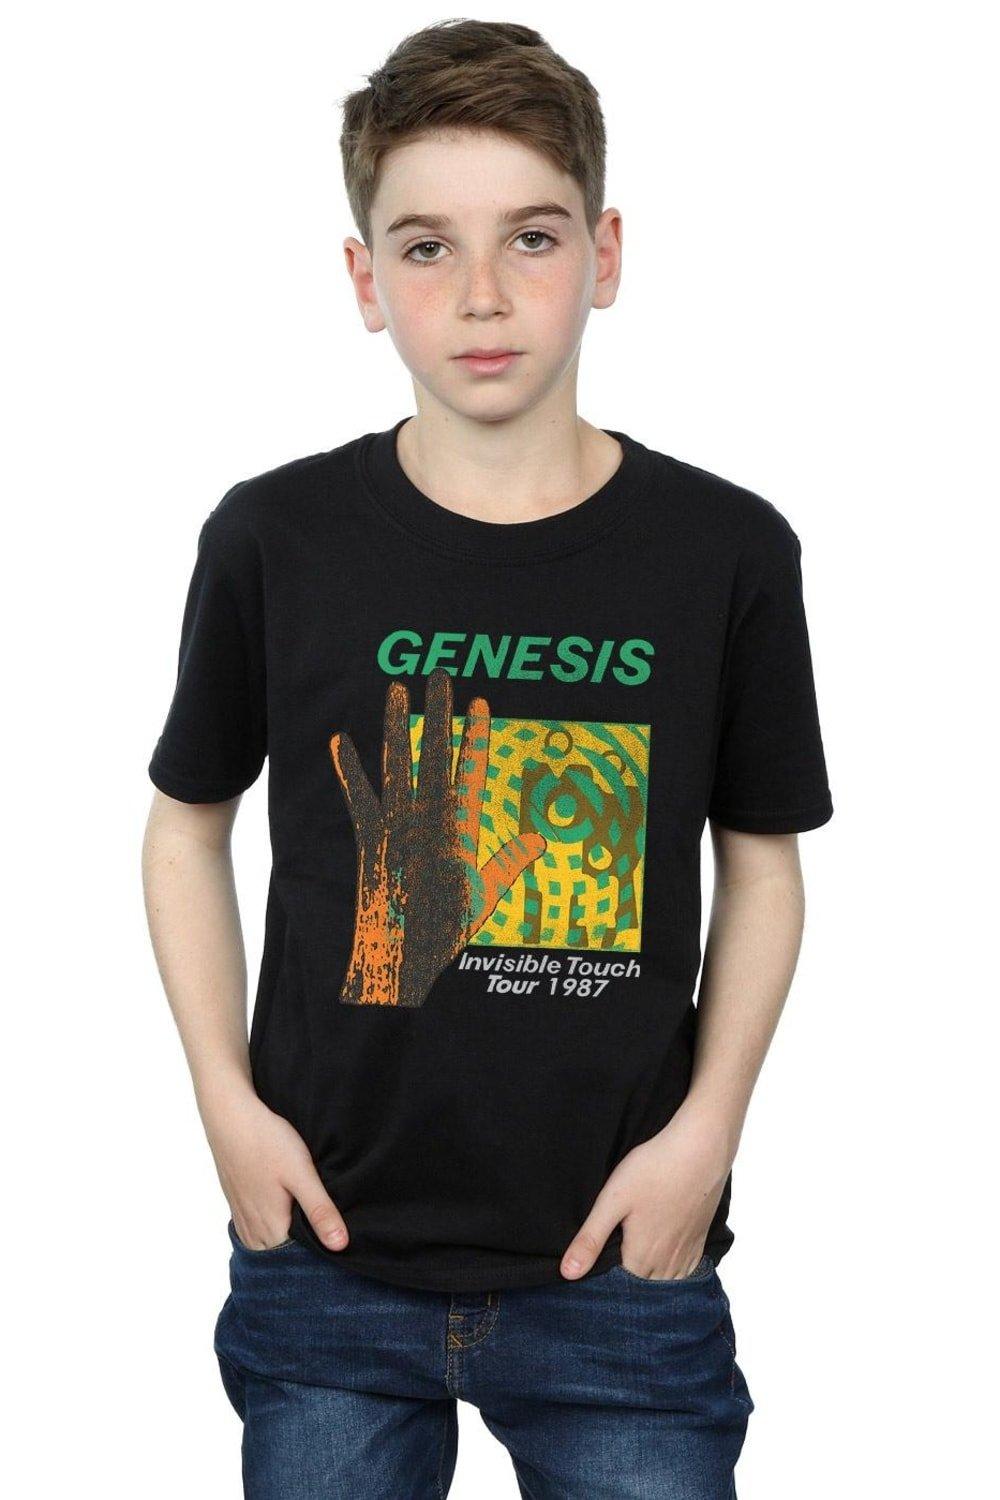 Футболка Invisible Touch Tour Genesis, черный